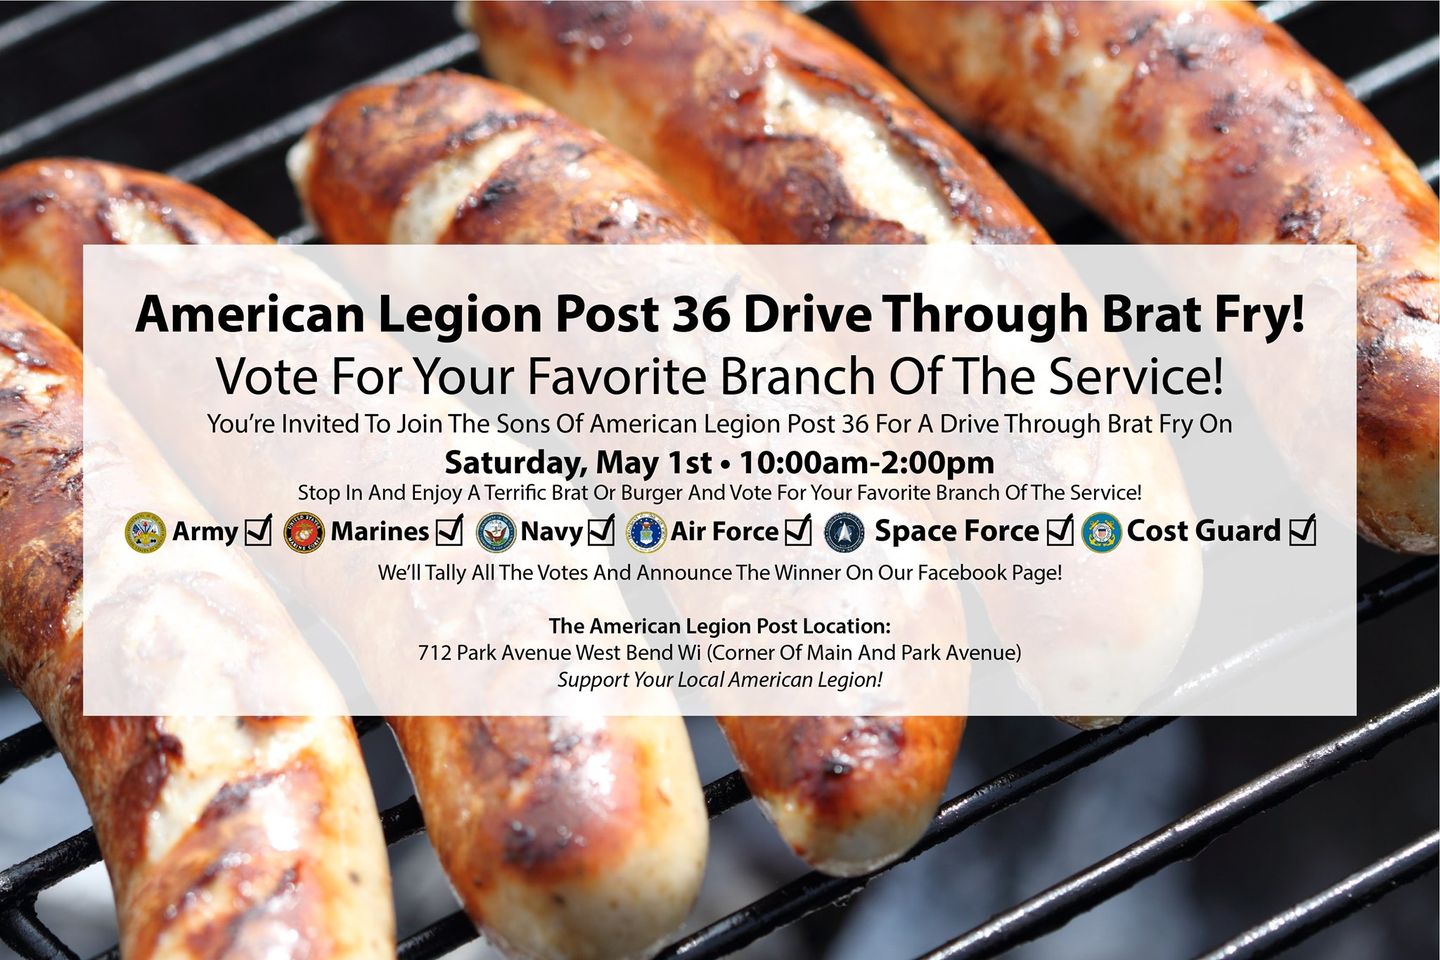 American Legion Post 36 drivethrough brat fry on Saturday, May 1